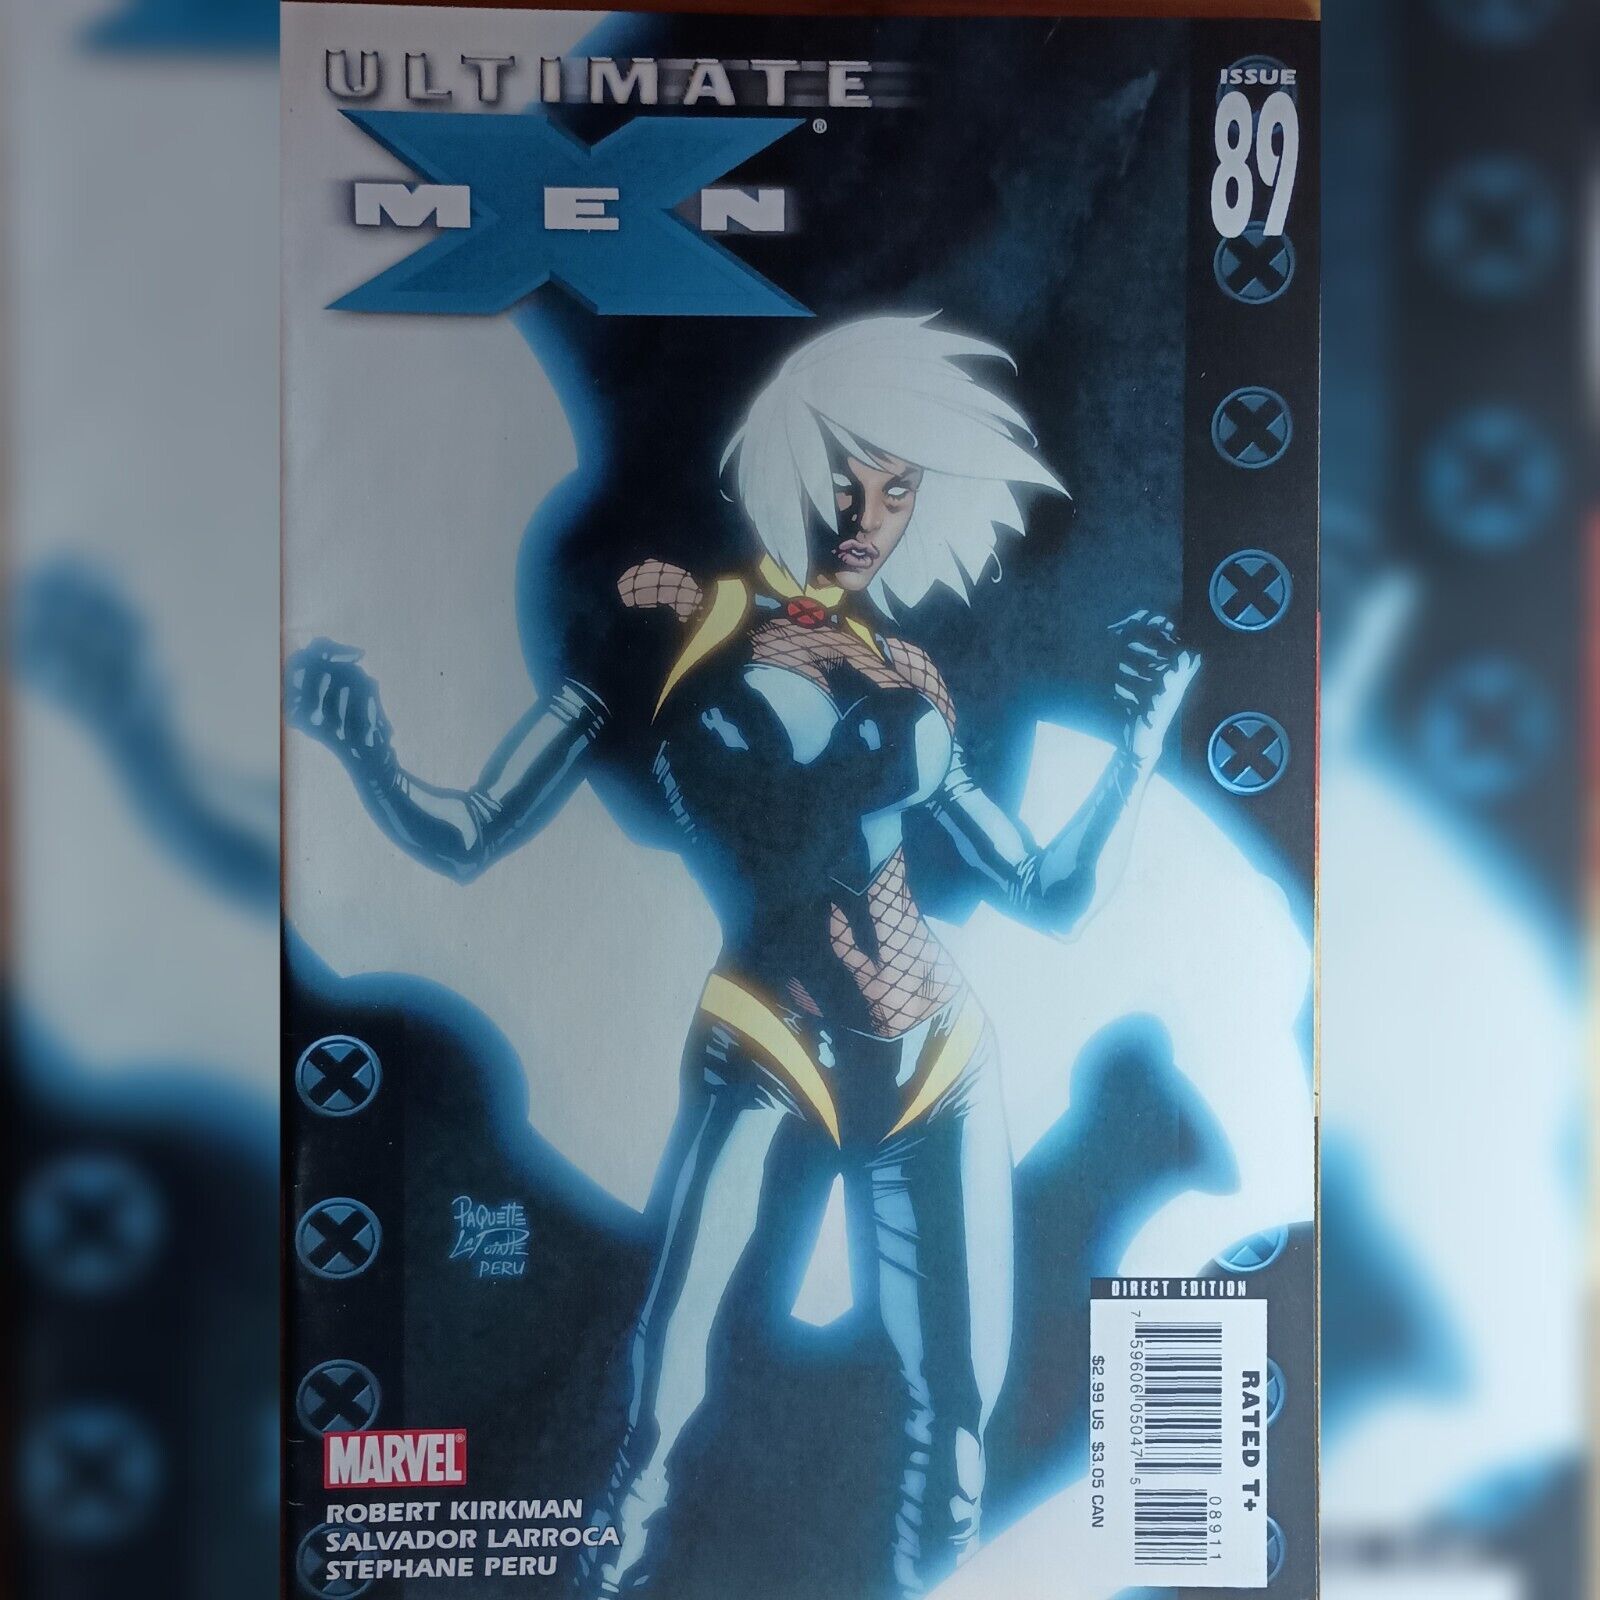 2008 Marvel Comics Ultimate X-Men 89 Robert Kirkman Story Paquette Cover Variant